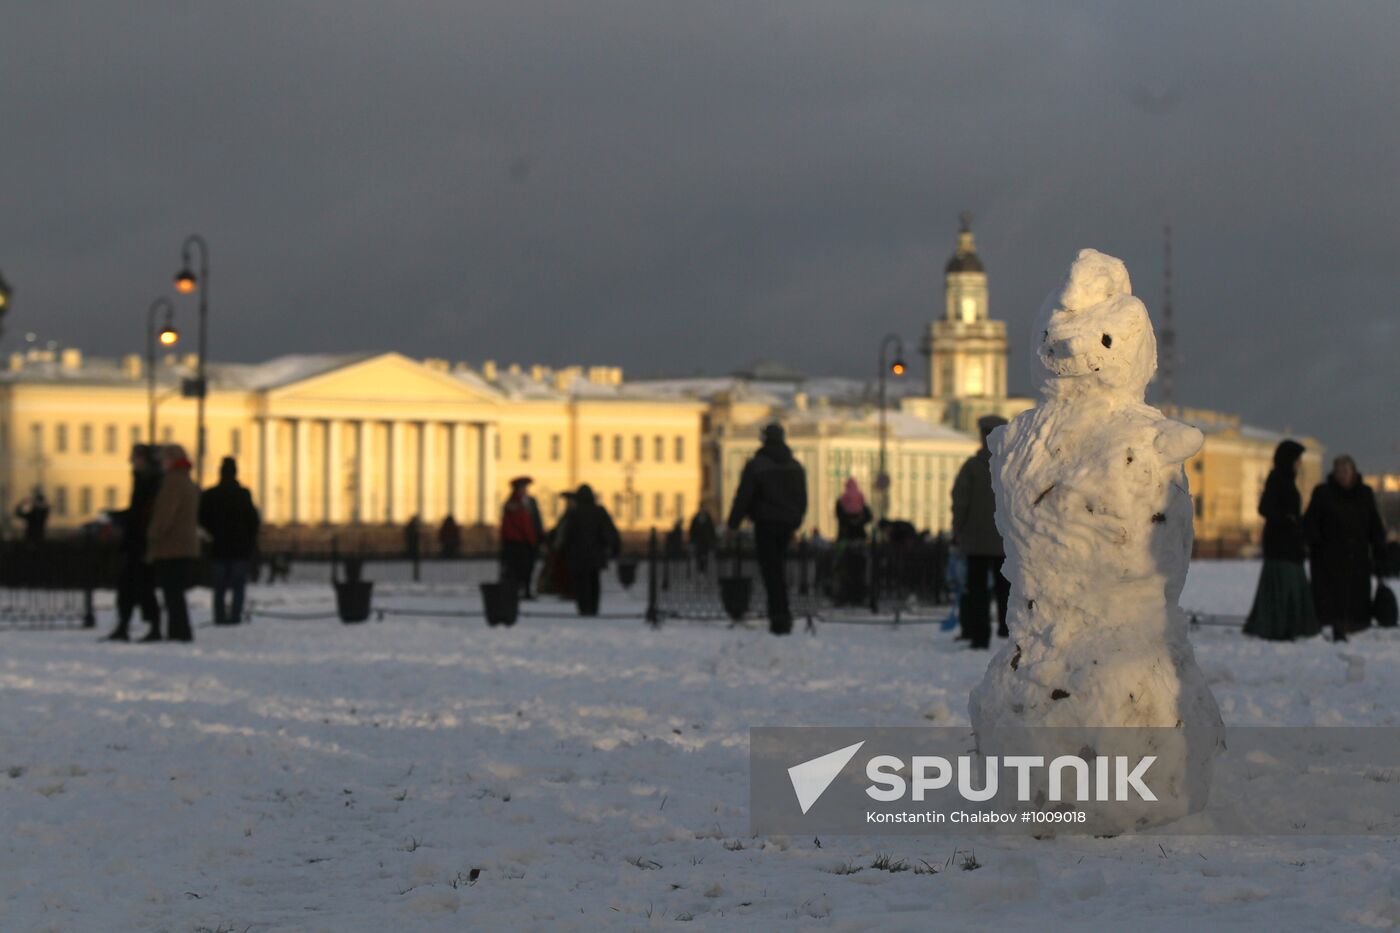 Winter holidays in St Petersburg